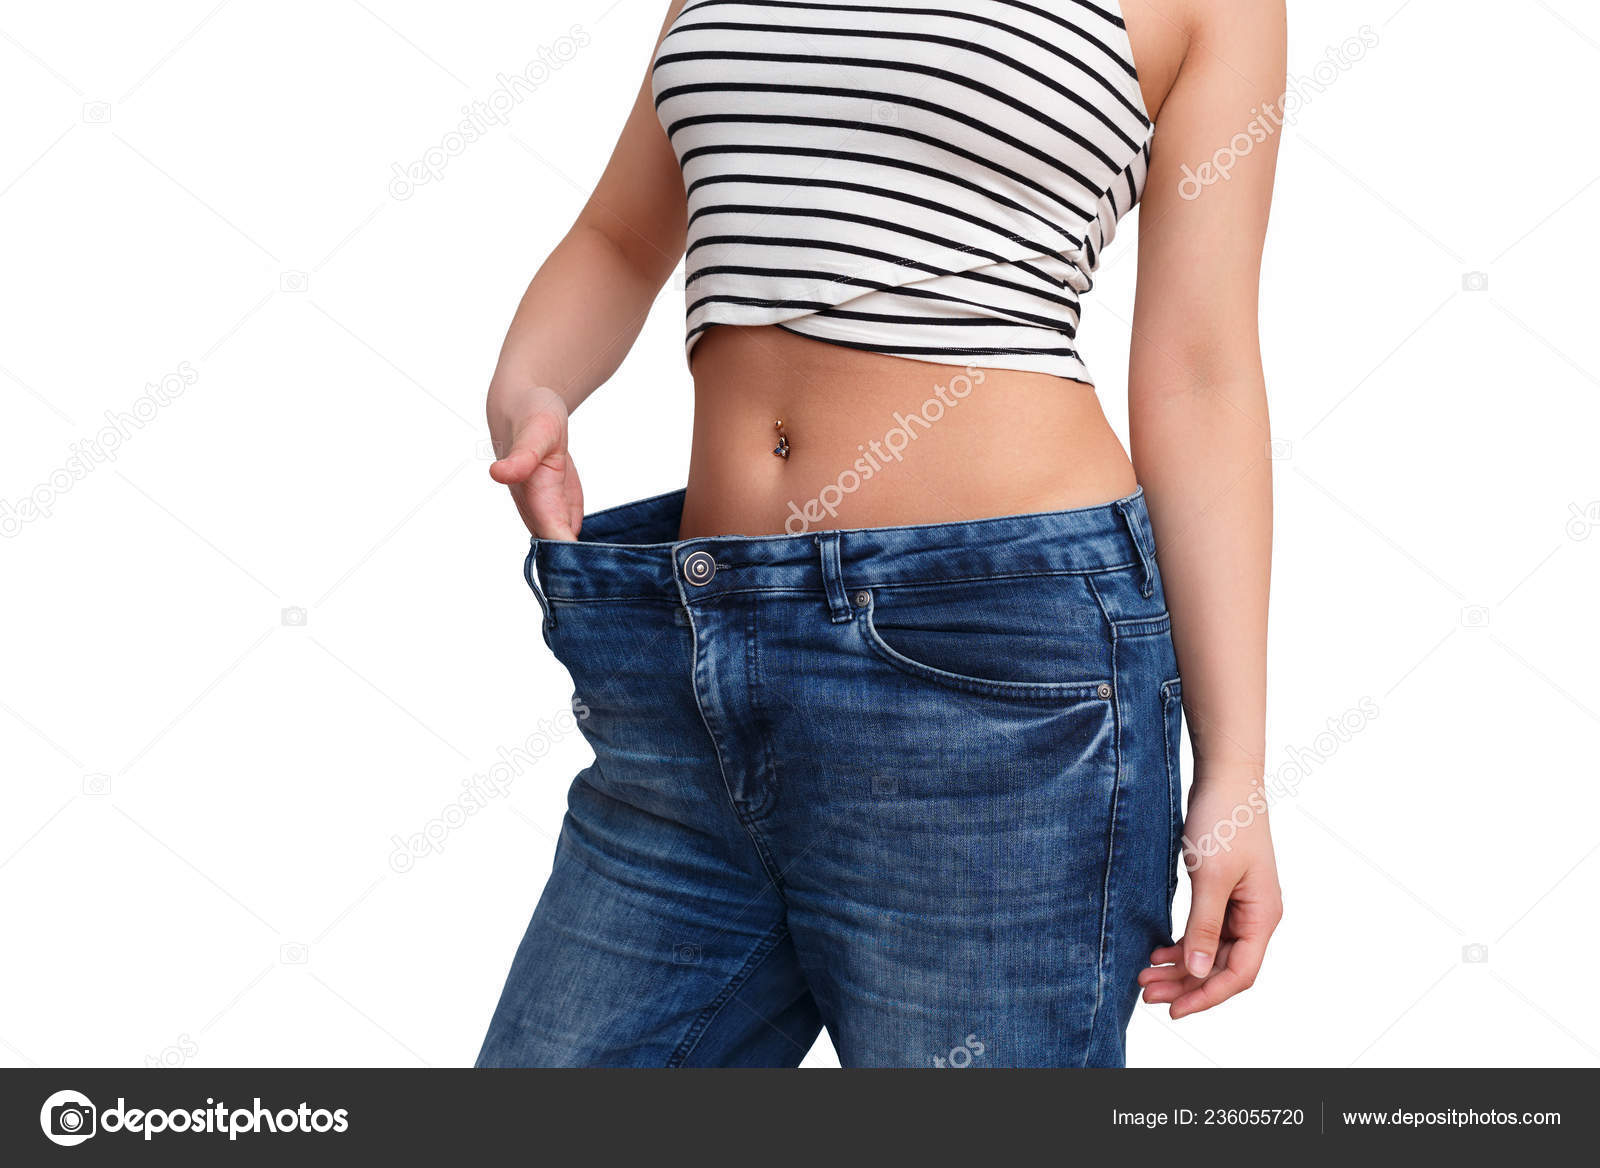 pants for skinny girl